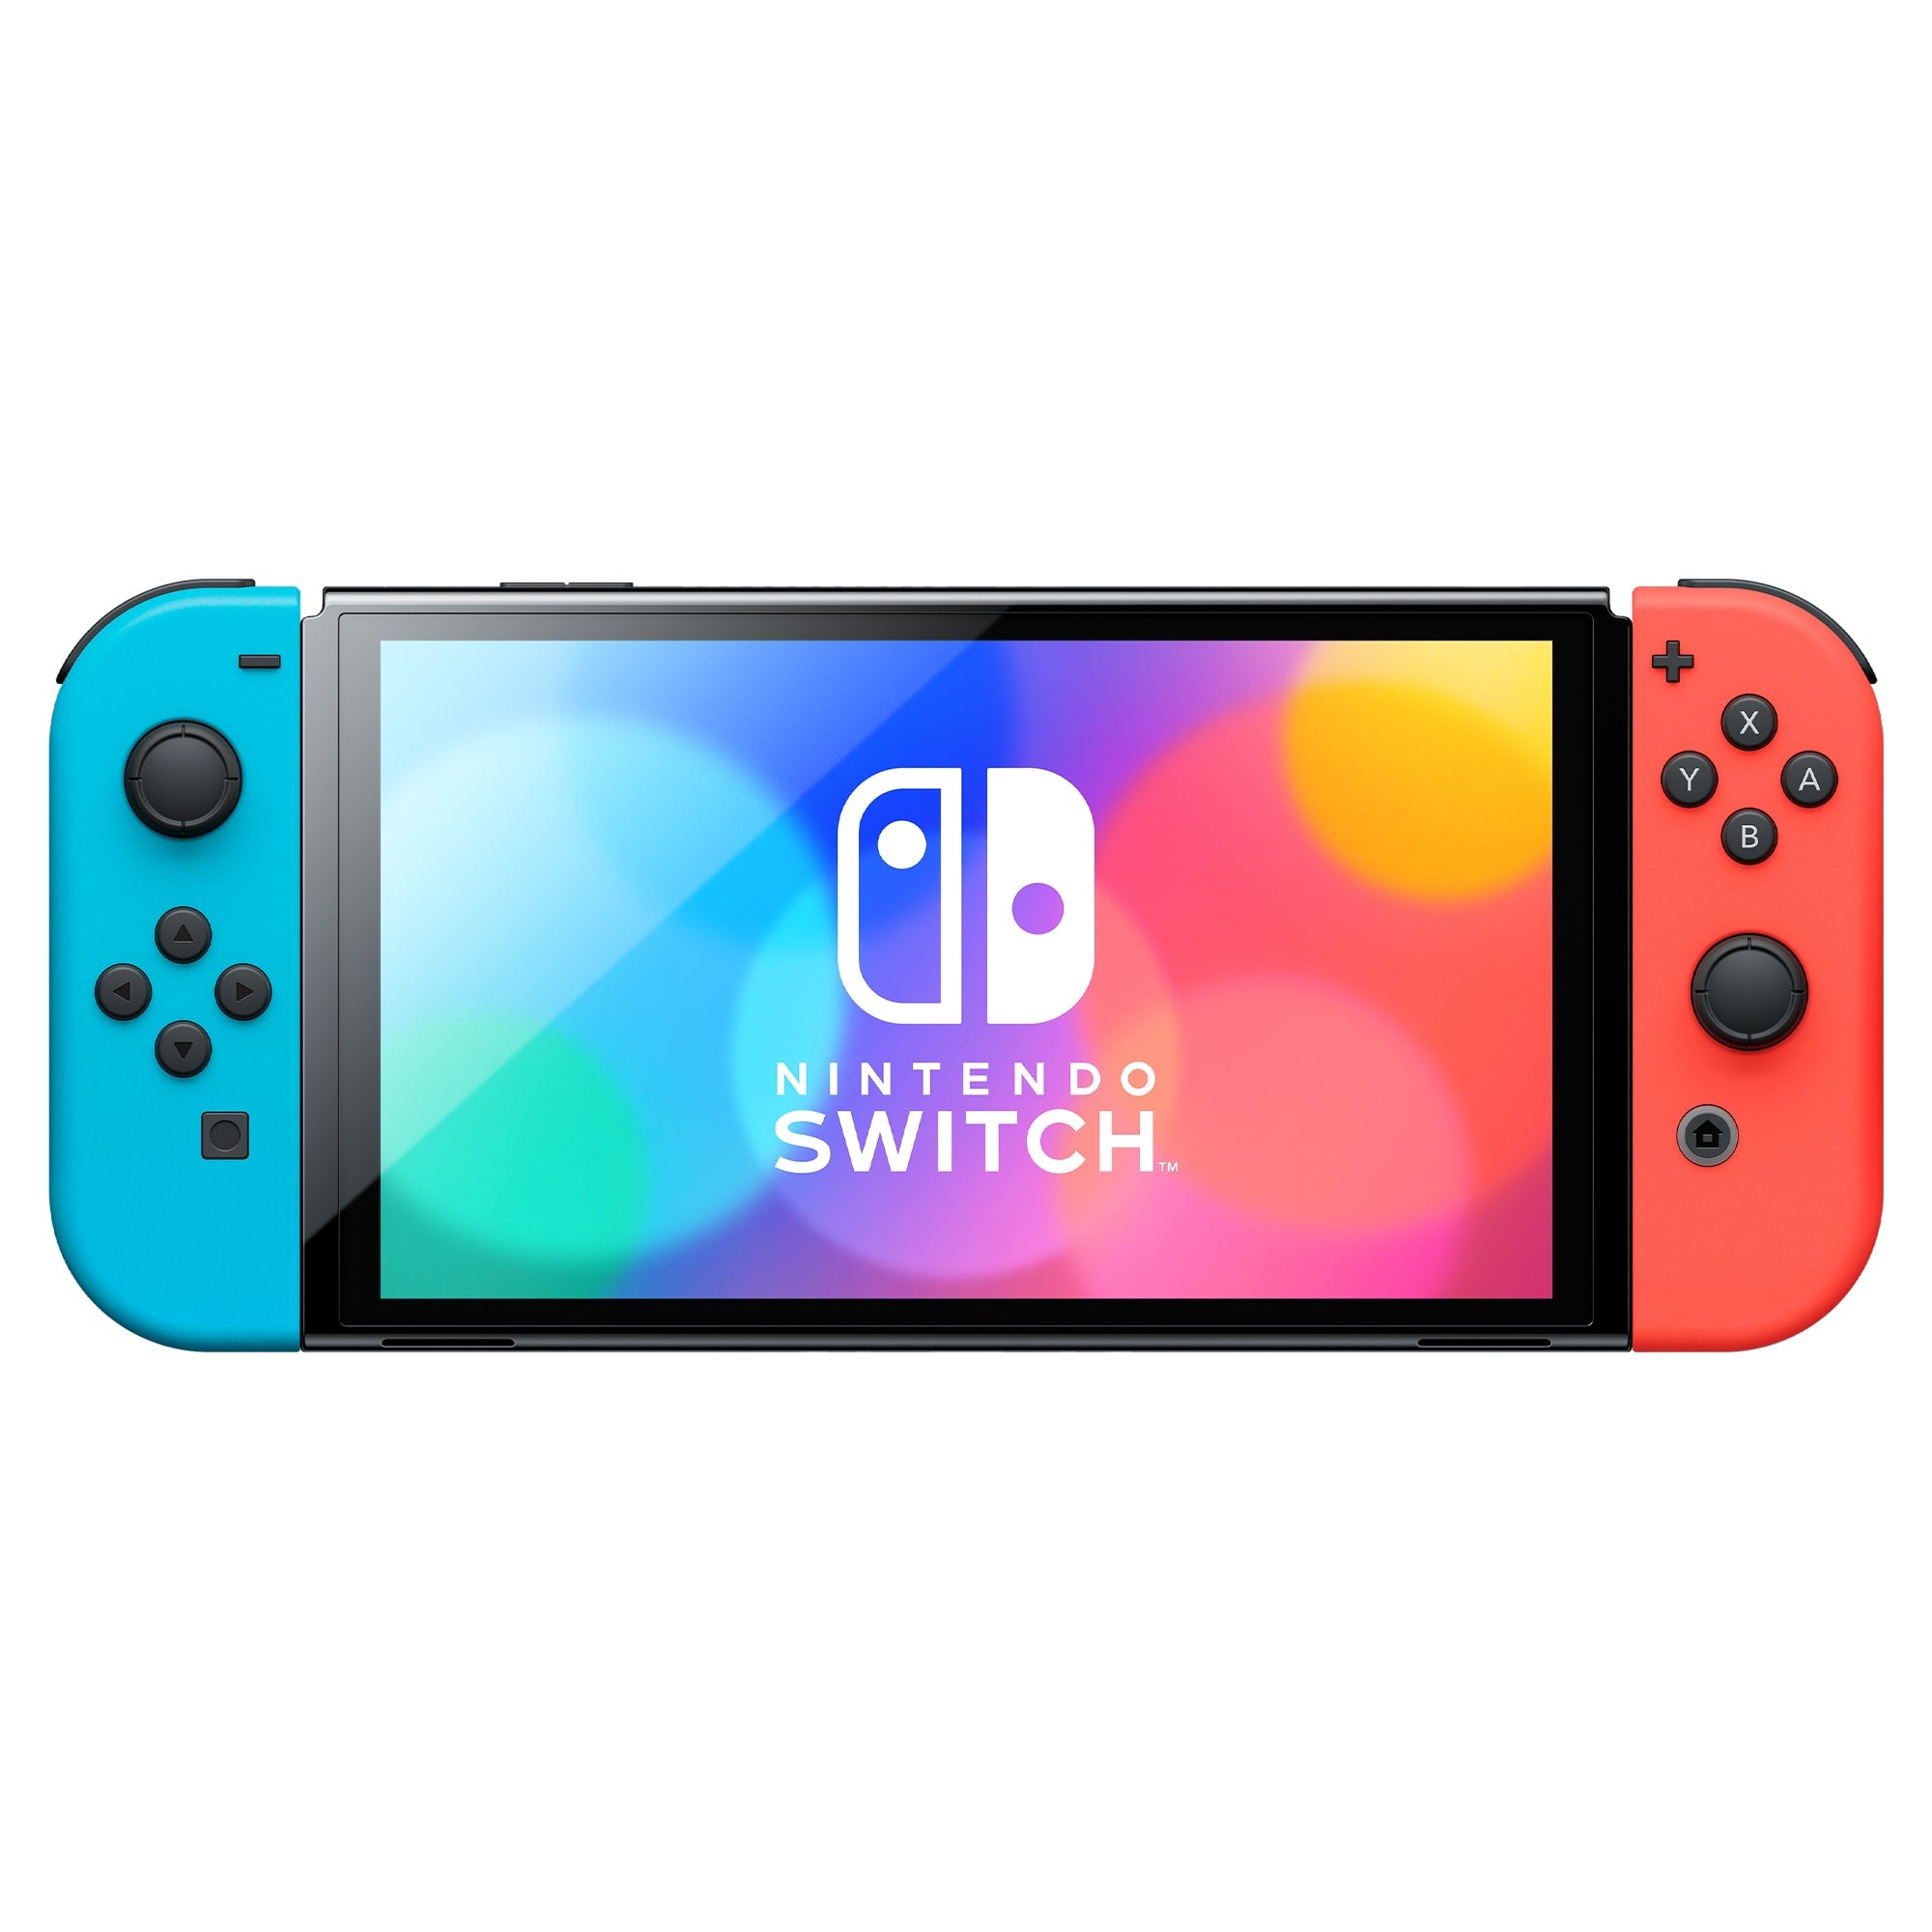 Nintendo Switch OLED Model 64GB, Blue / Red - Refurbished Good